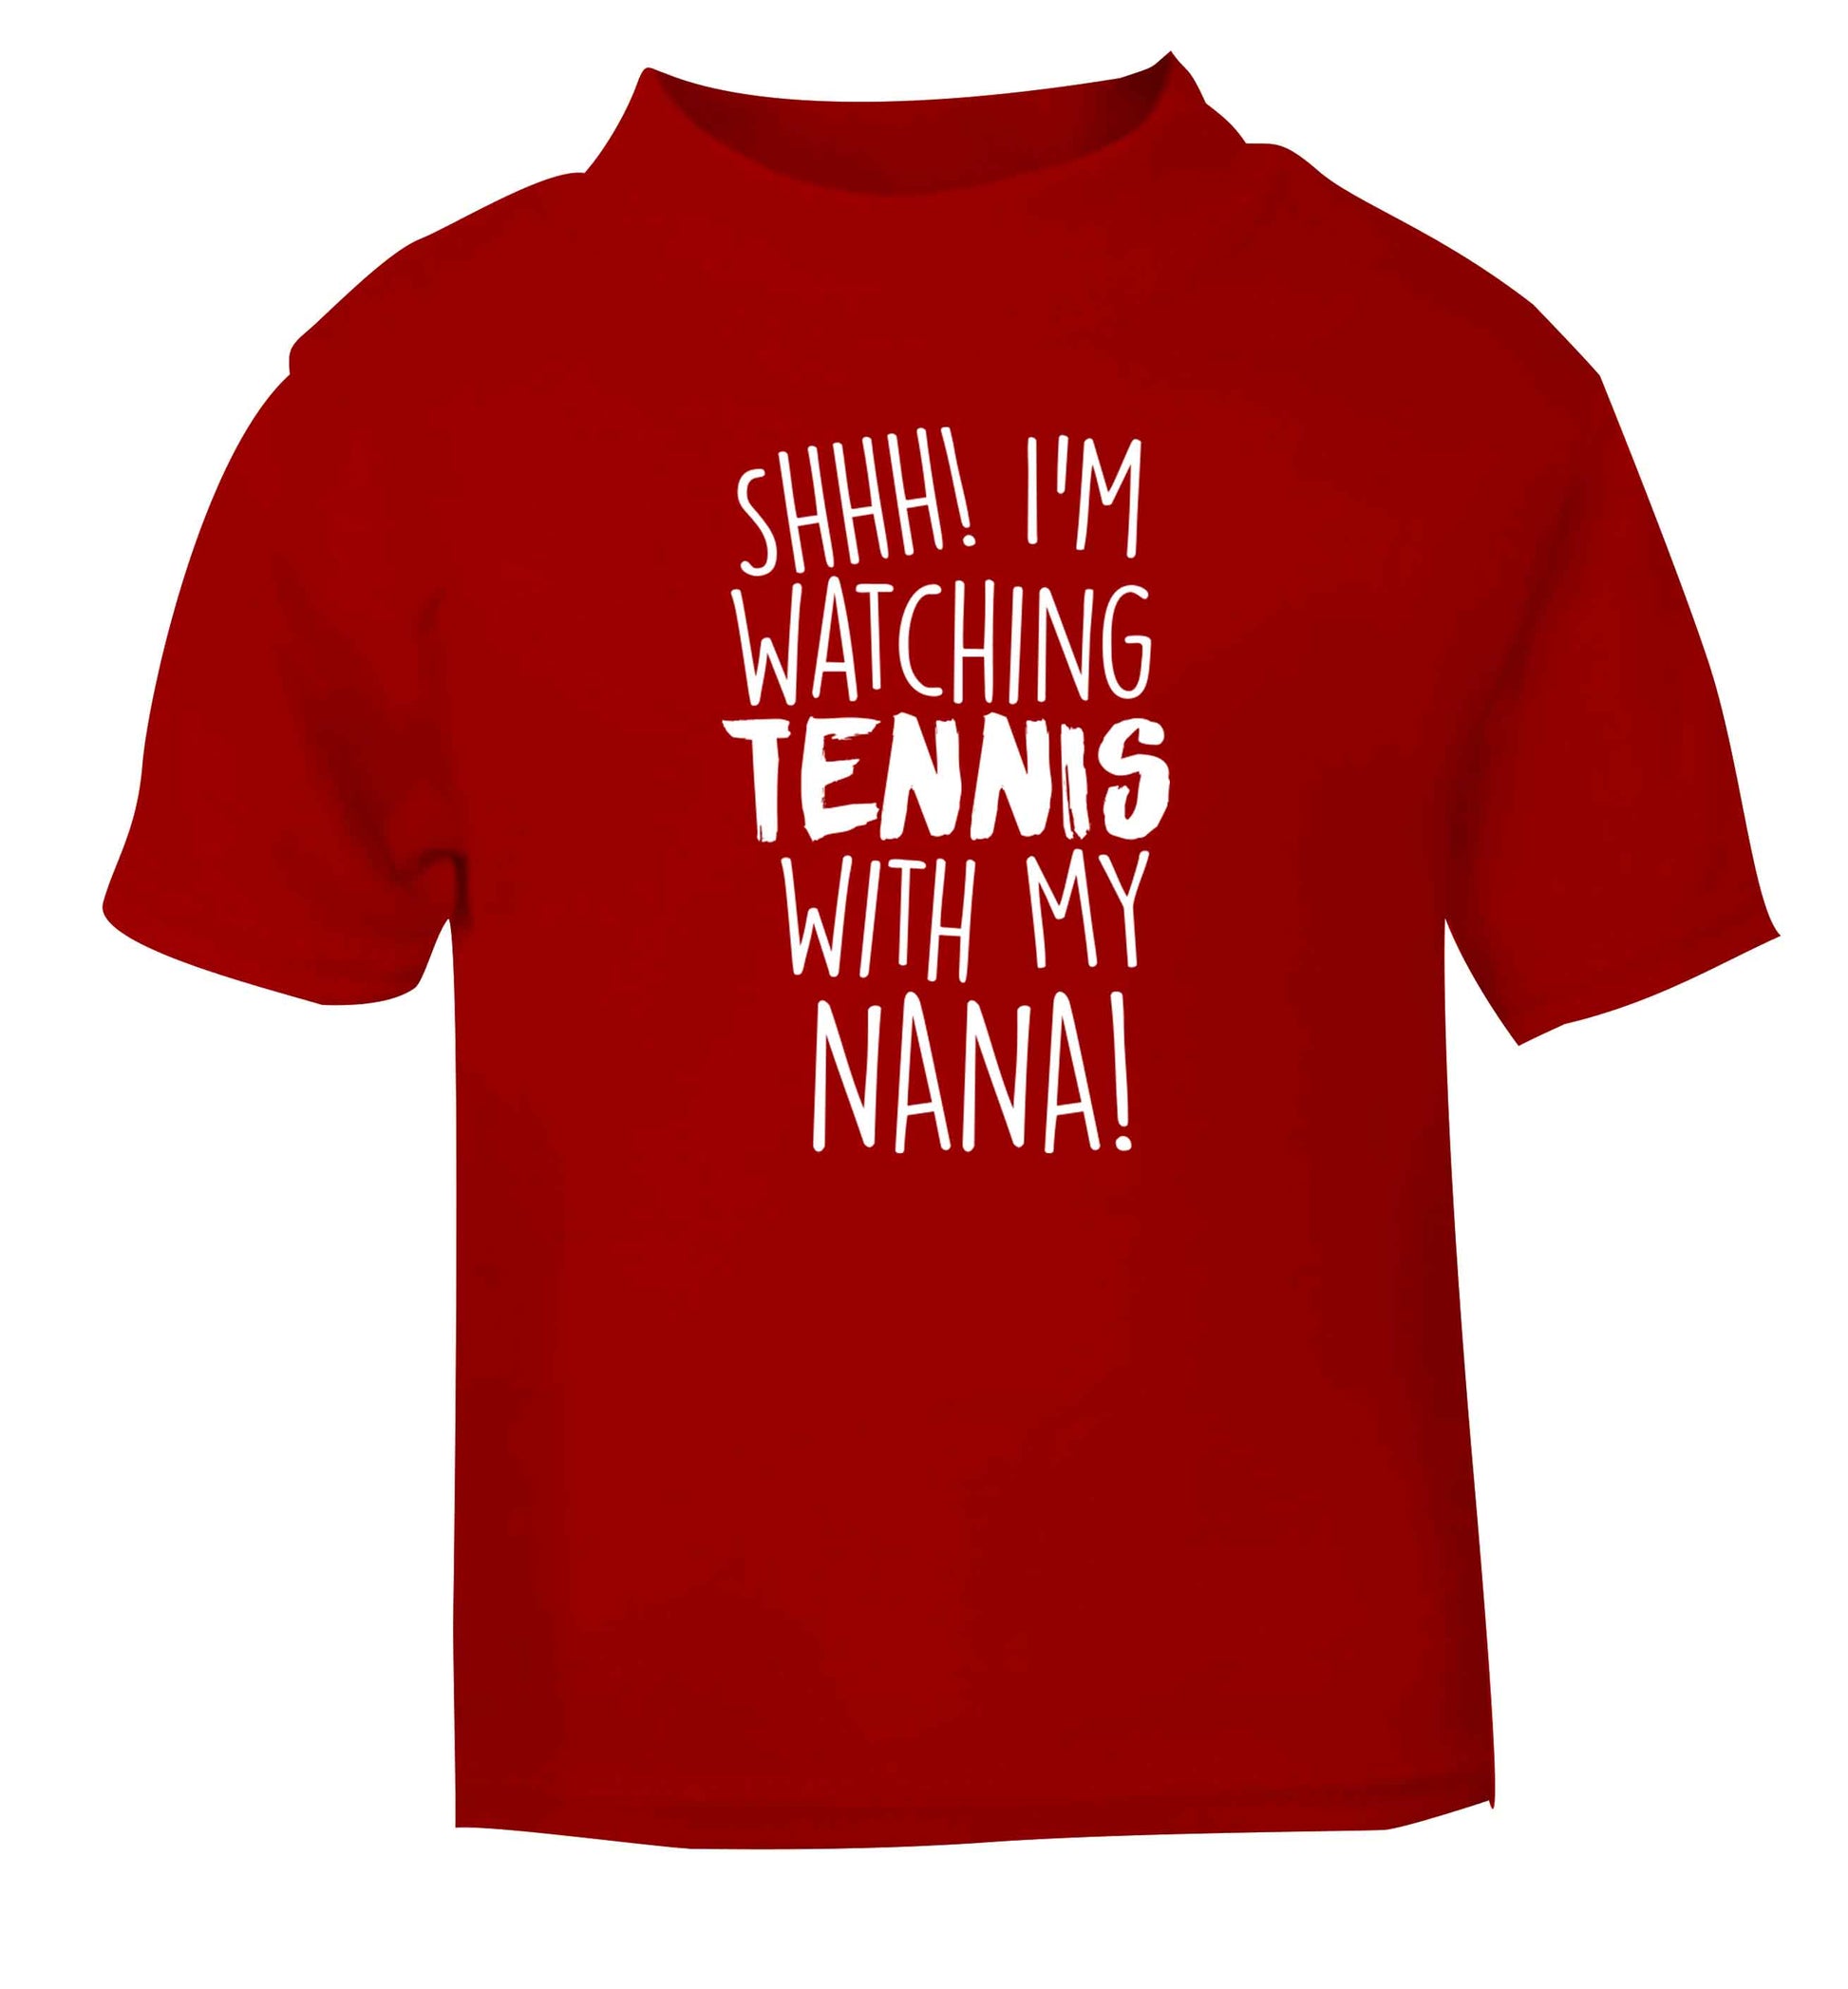 Shh! I'm watching tennis with my nana! red Baby Toddler Tshirt 2 Years